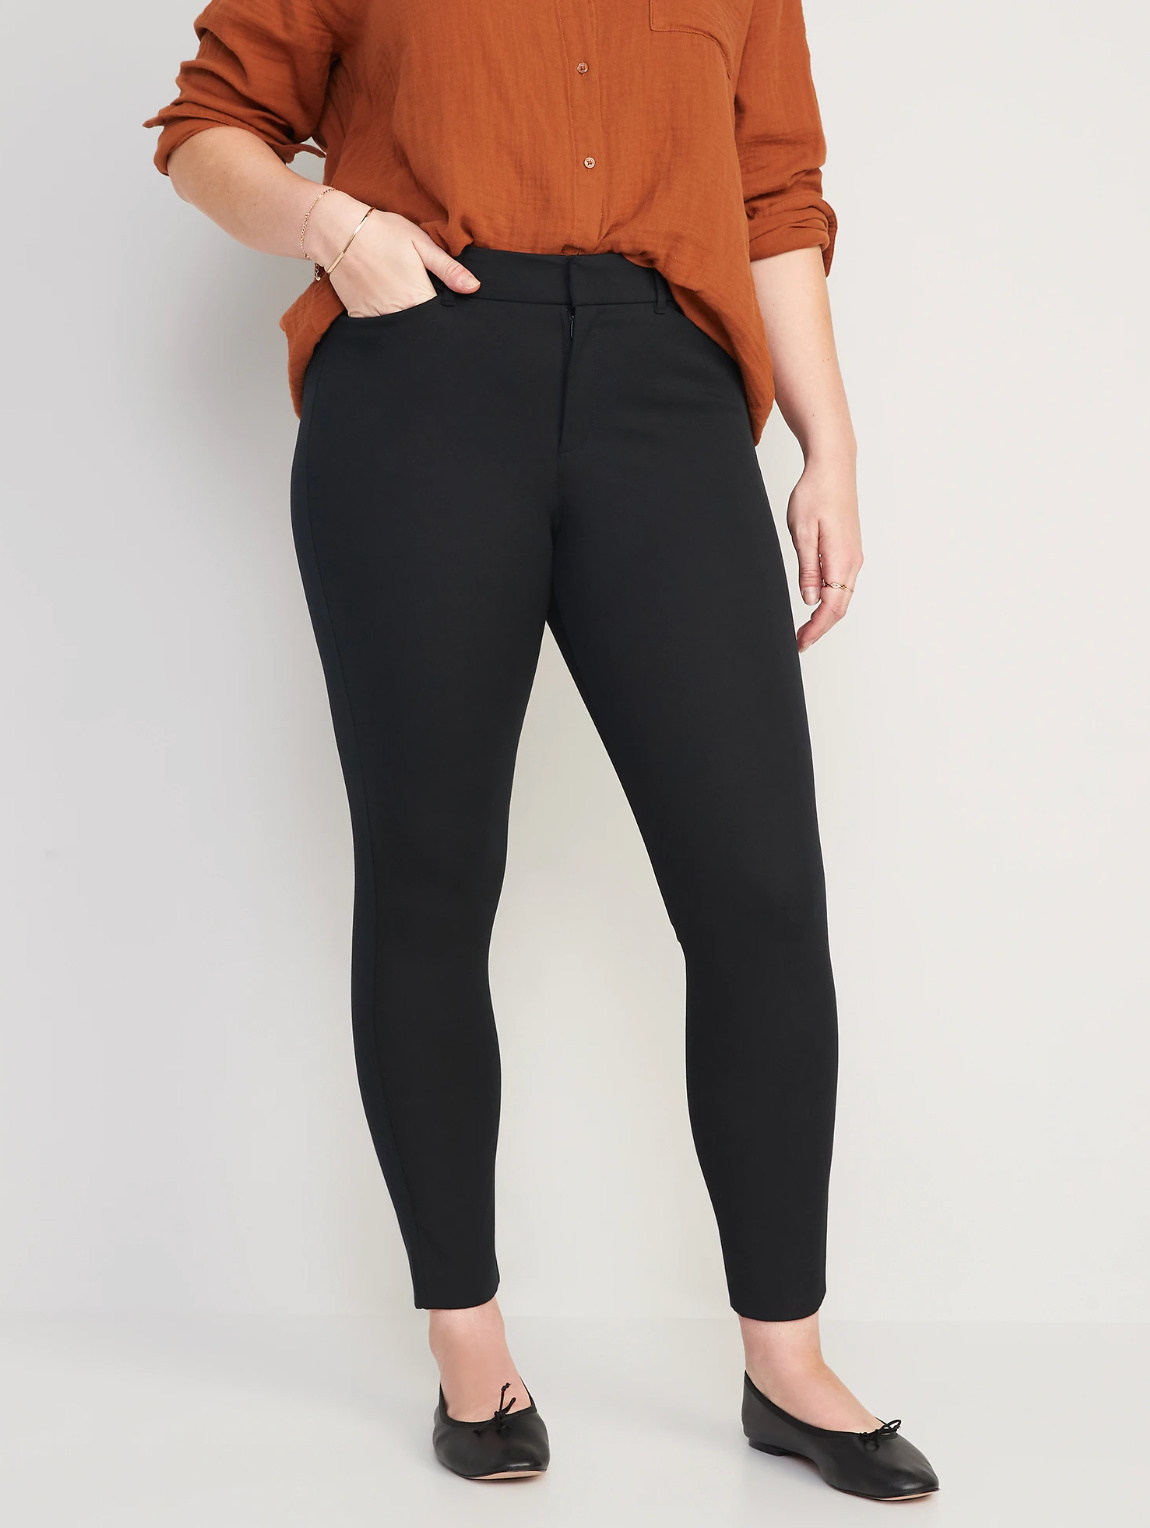 Betabrand Dress Pants Straight Leg Black XS - $28 - From Suzy